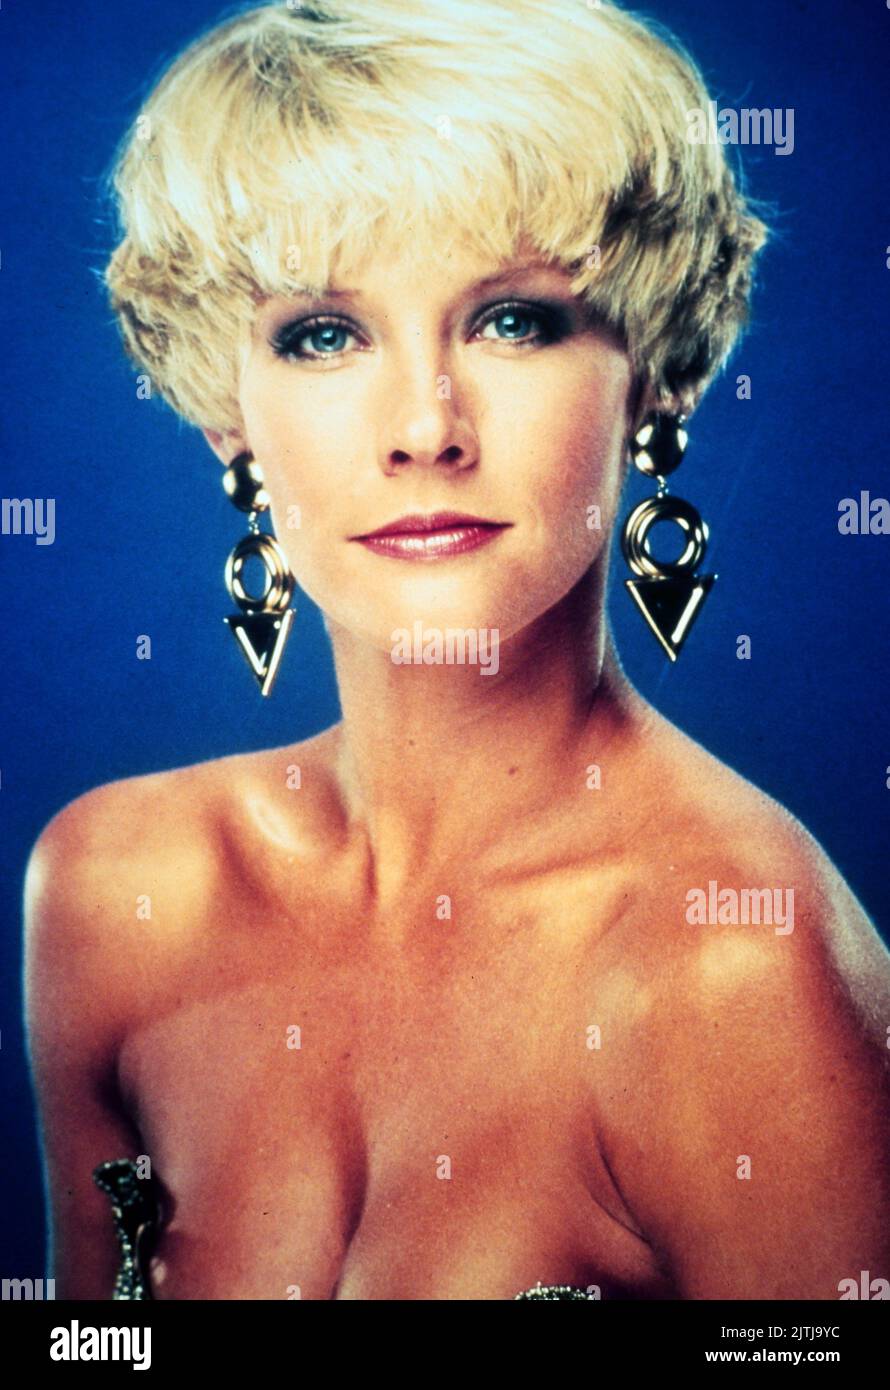 Dallas, Fernsehserie, USA 1978 - 1991, Darsteller: Kimberly Foster Foto Stock